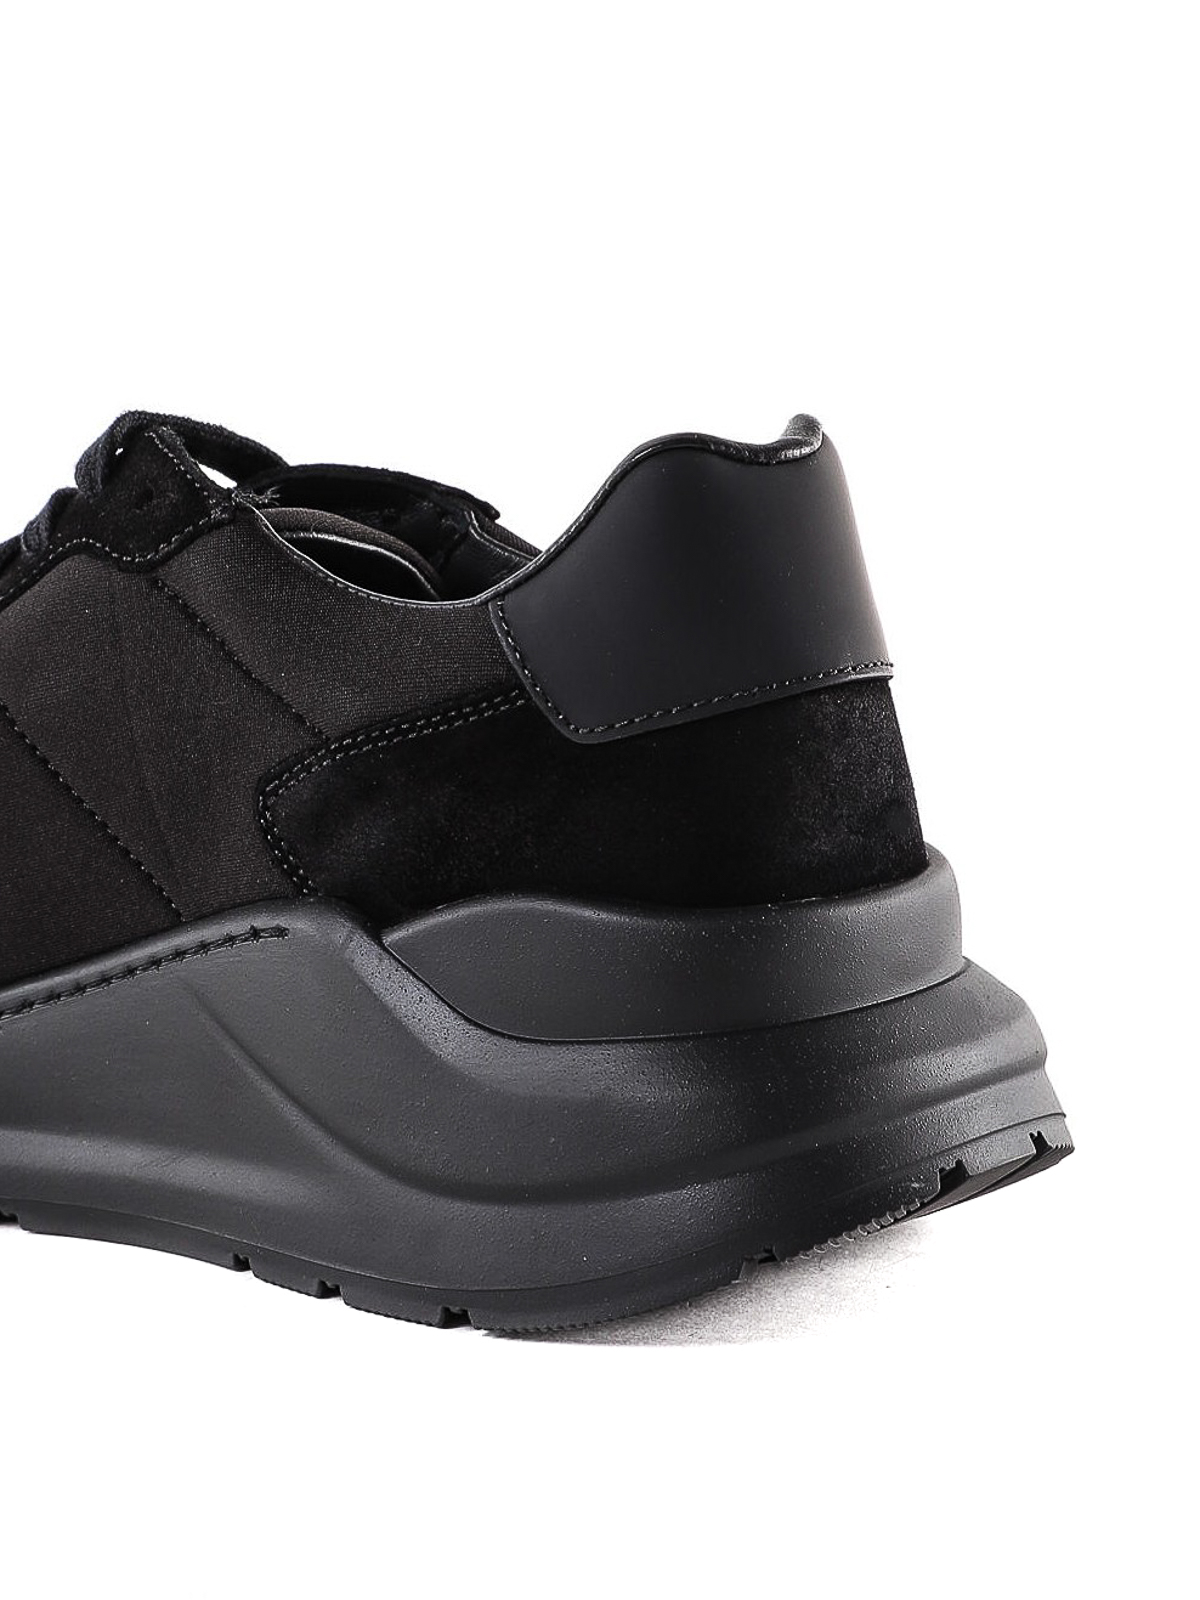 Trainers Burberry - Regis black sneakers - 4078715 | Shop online at iKRIX